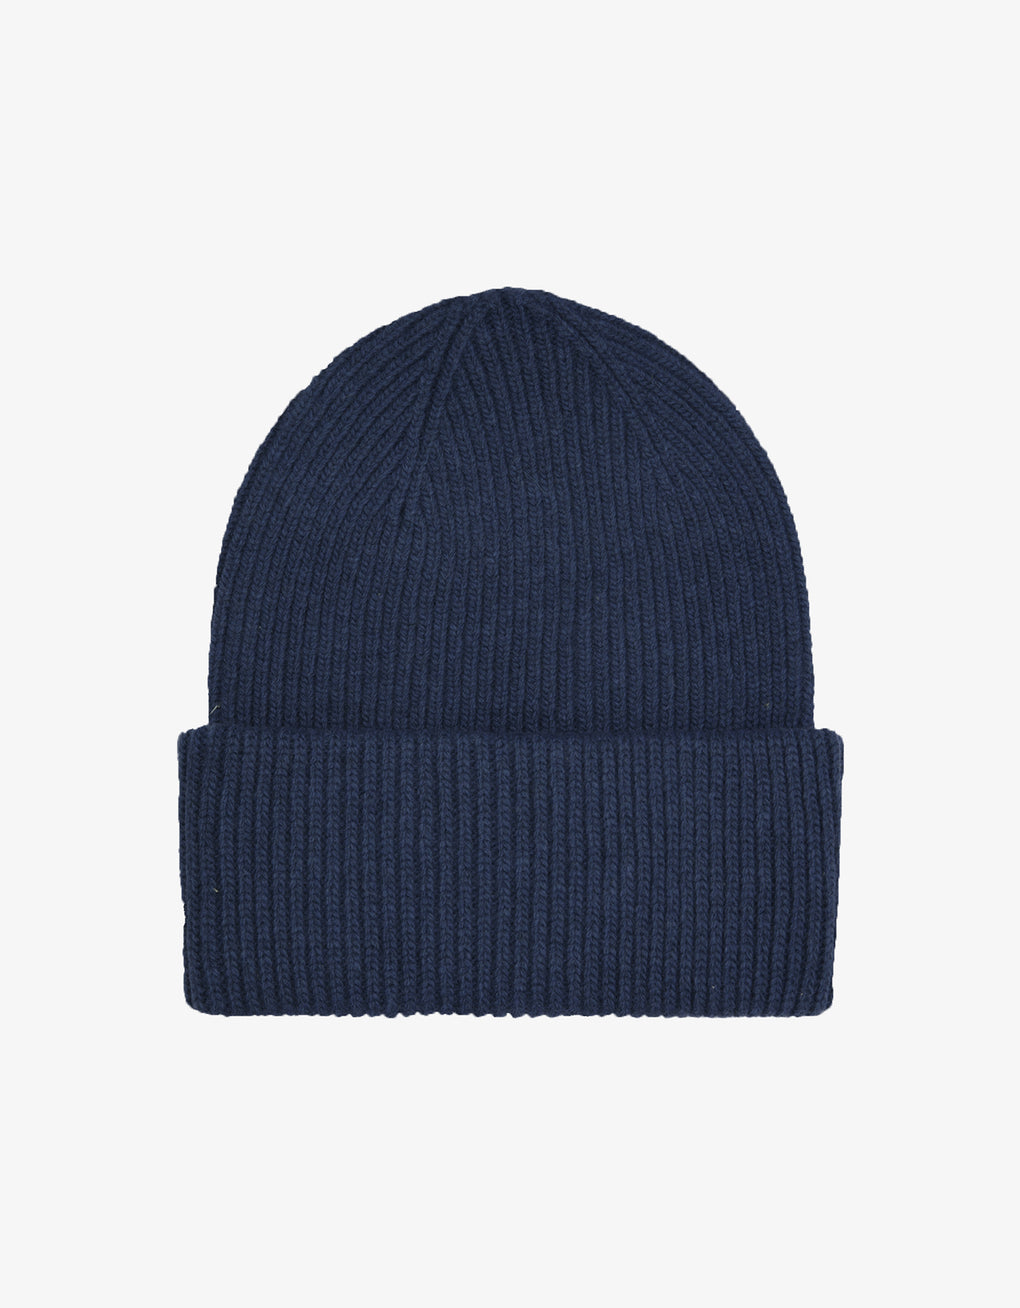 Merino wool hat - navy blue